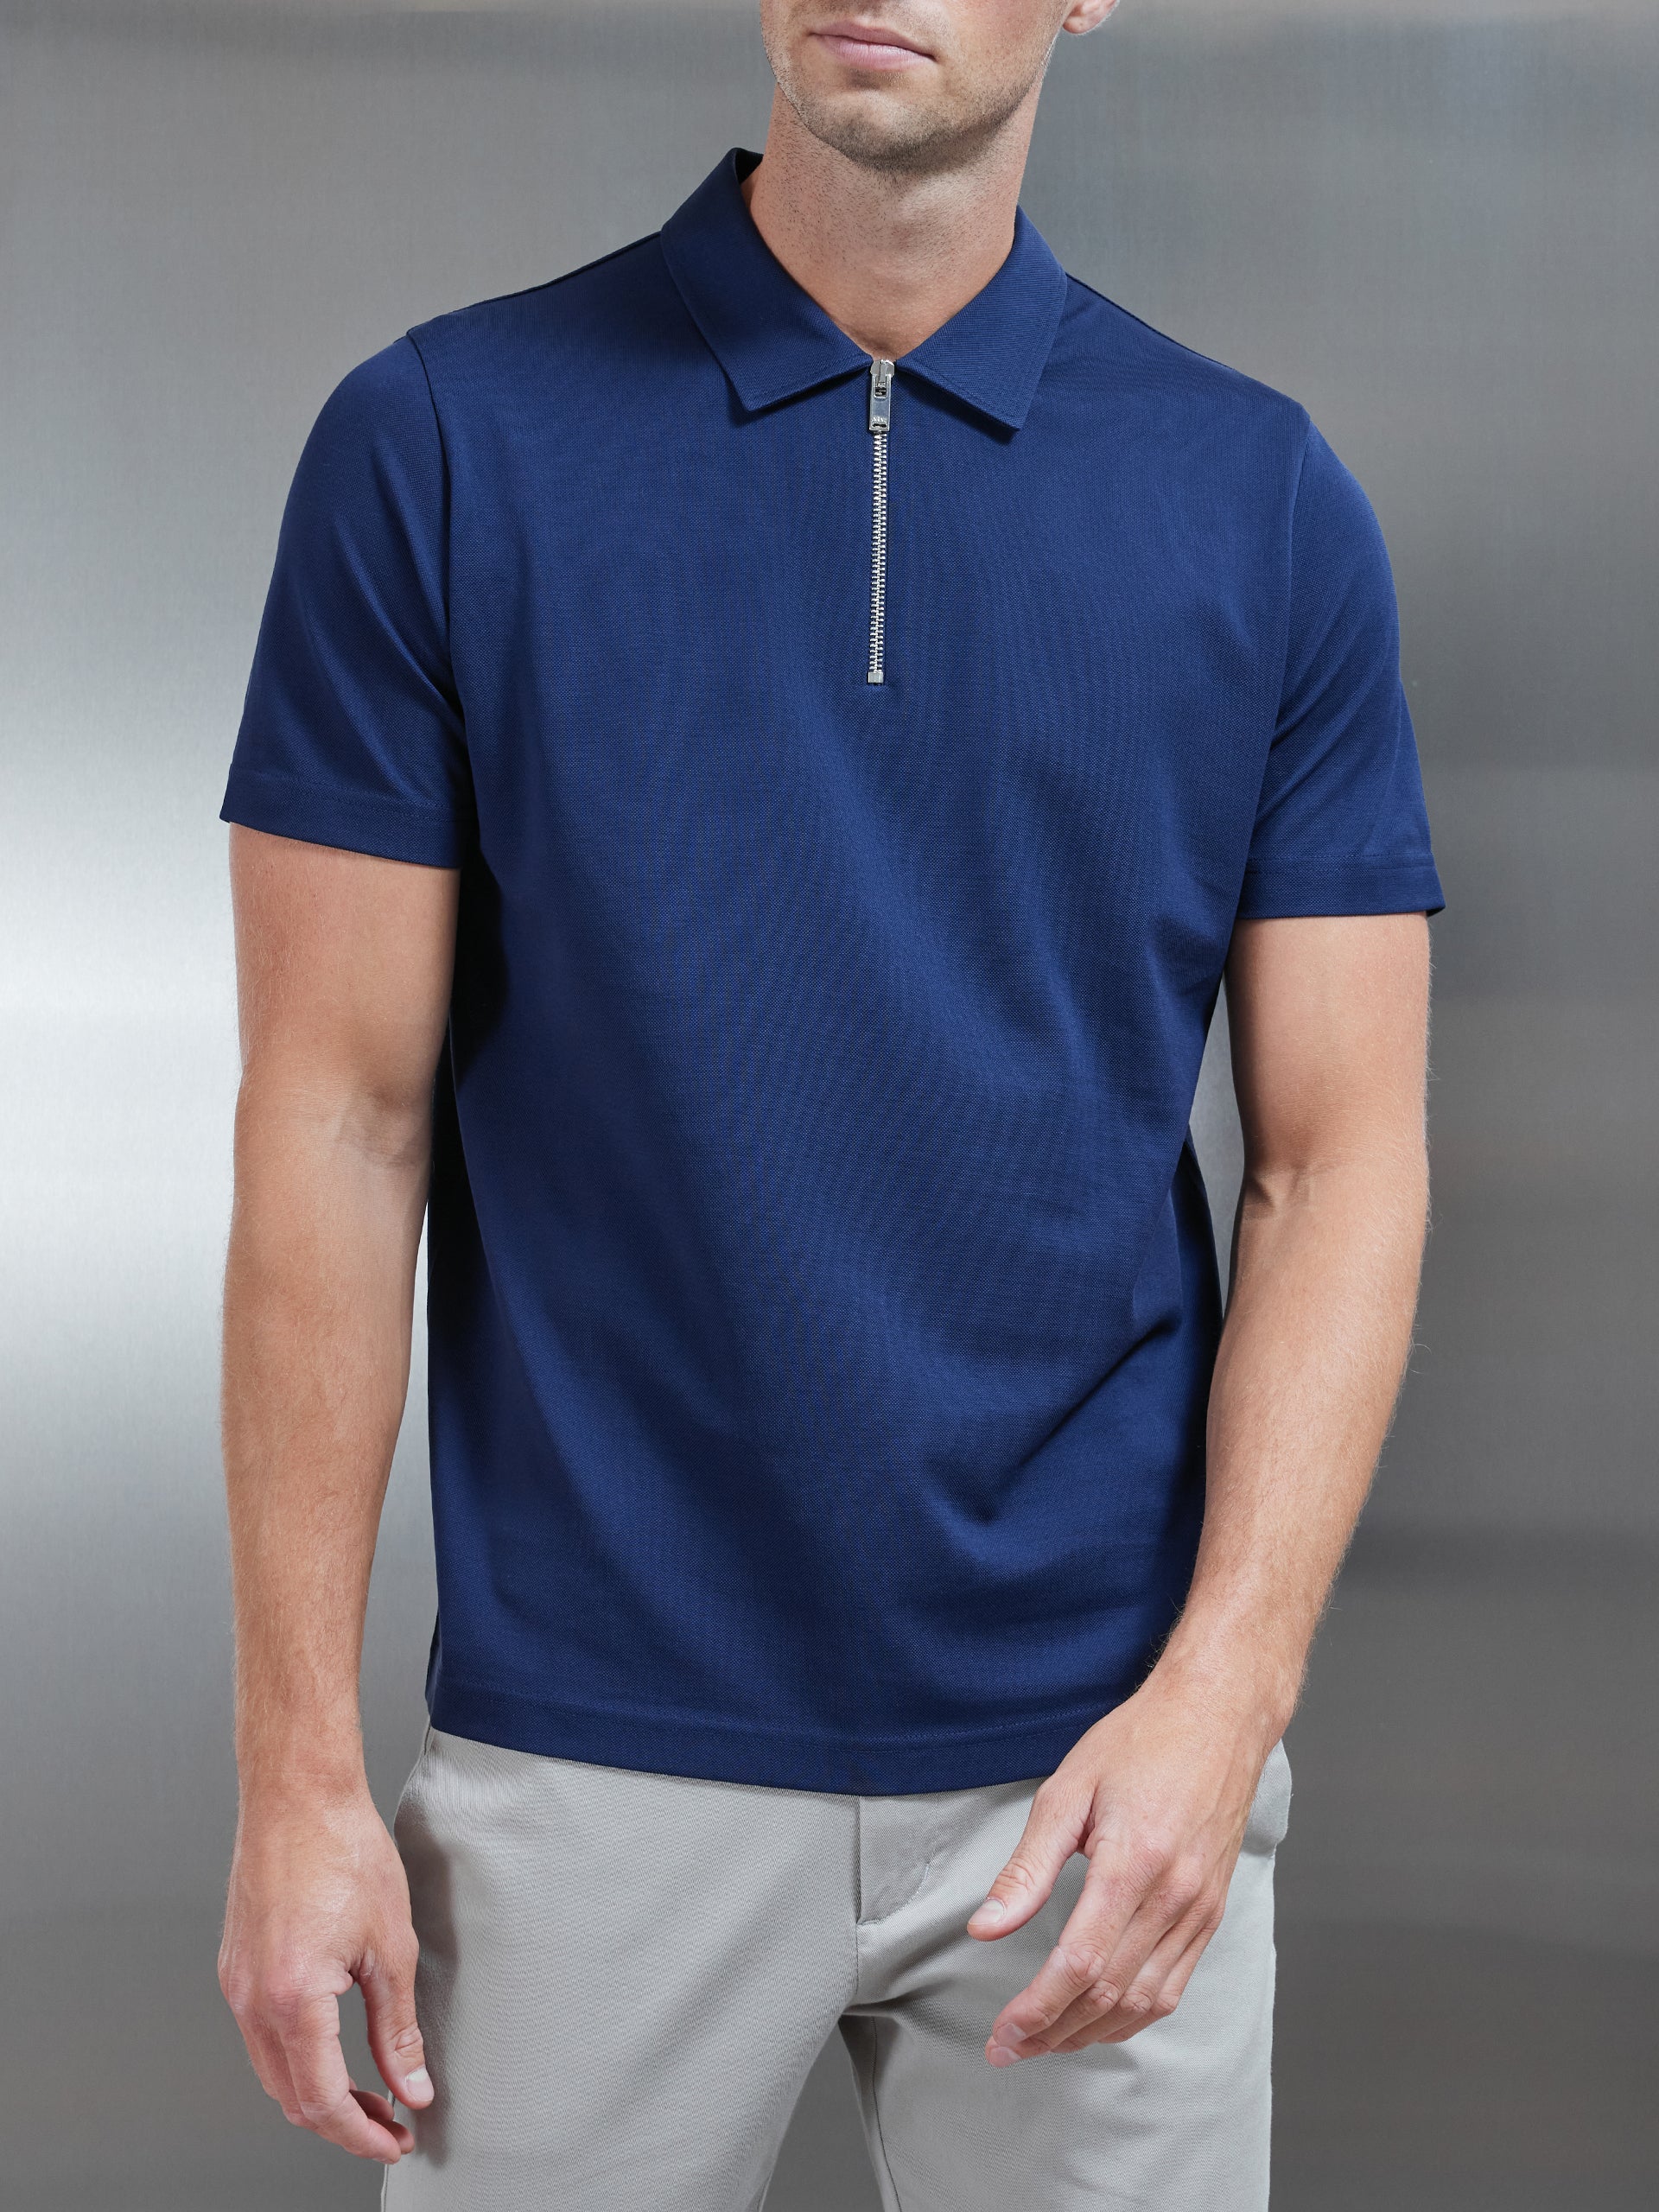 Navy Mercerised Pique Polo Shirt - Short Sleeve